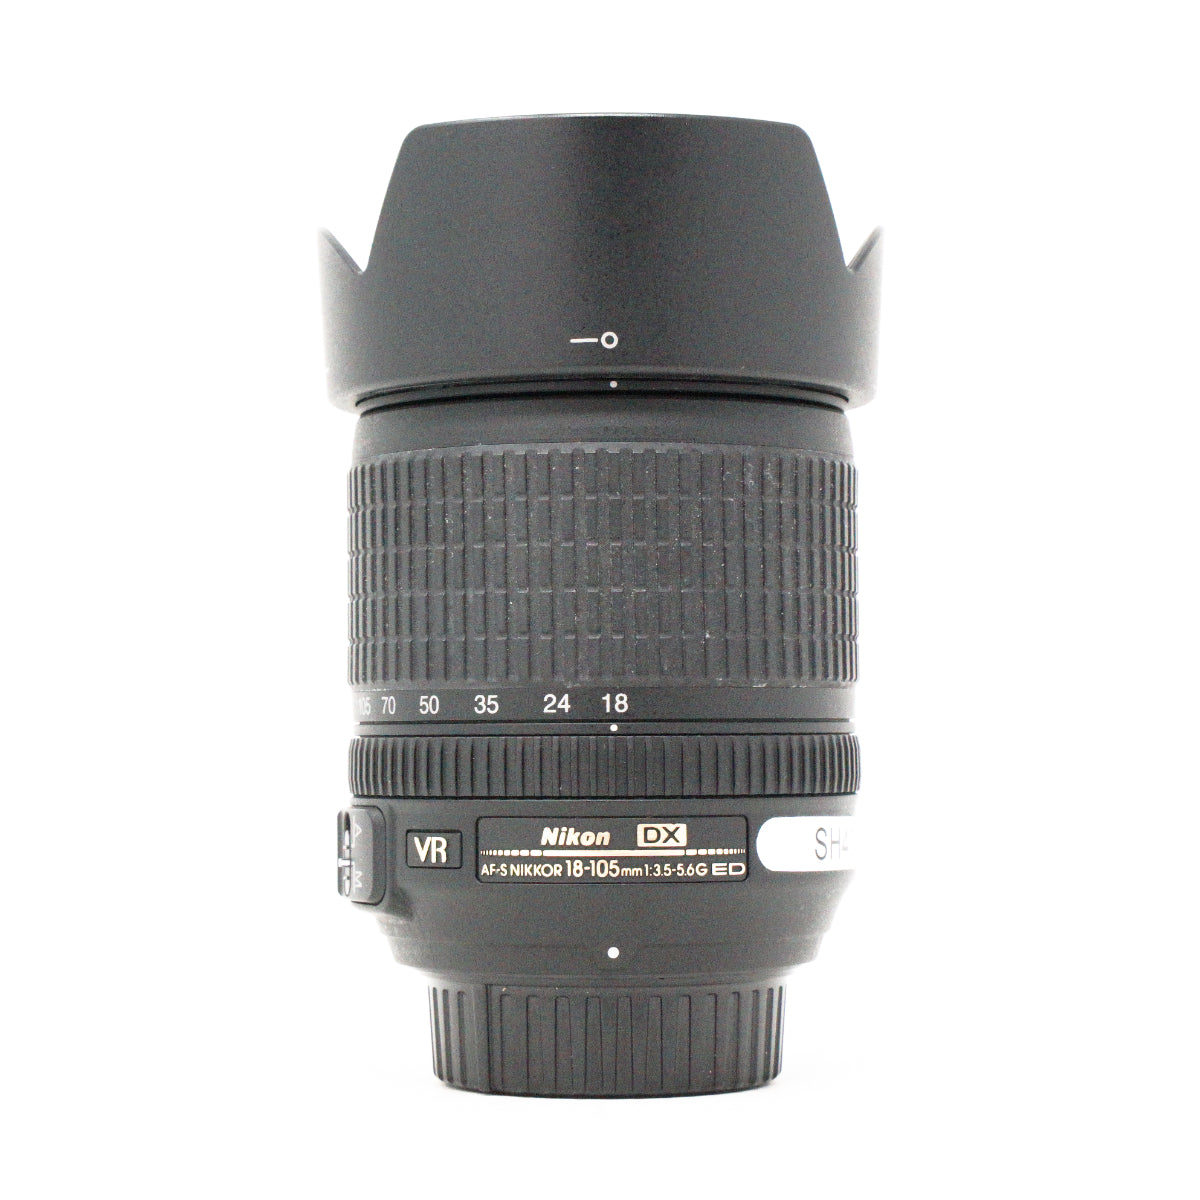 USED Nikon DX 18-105mm f/3.5-5.6G Lens